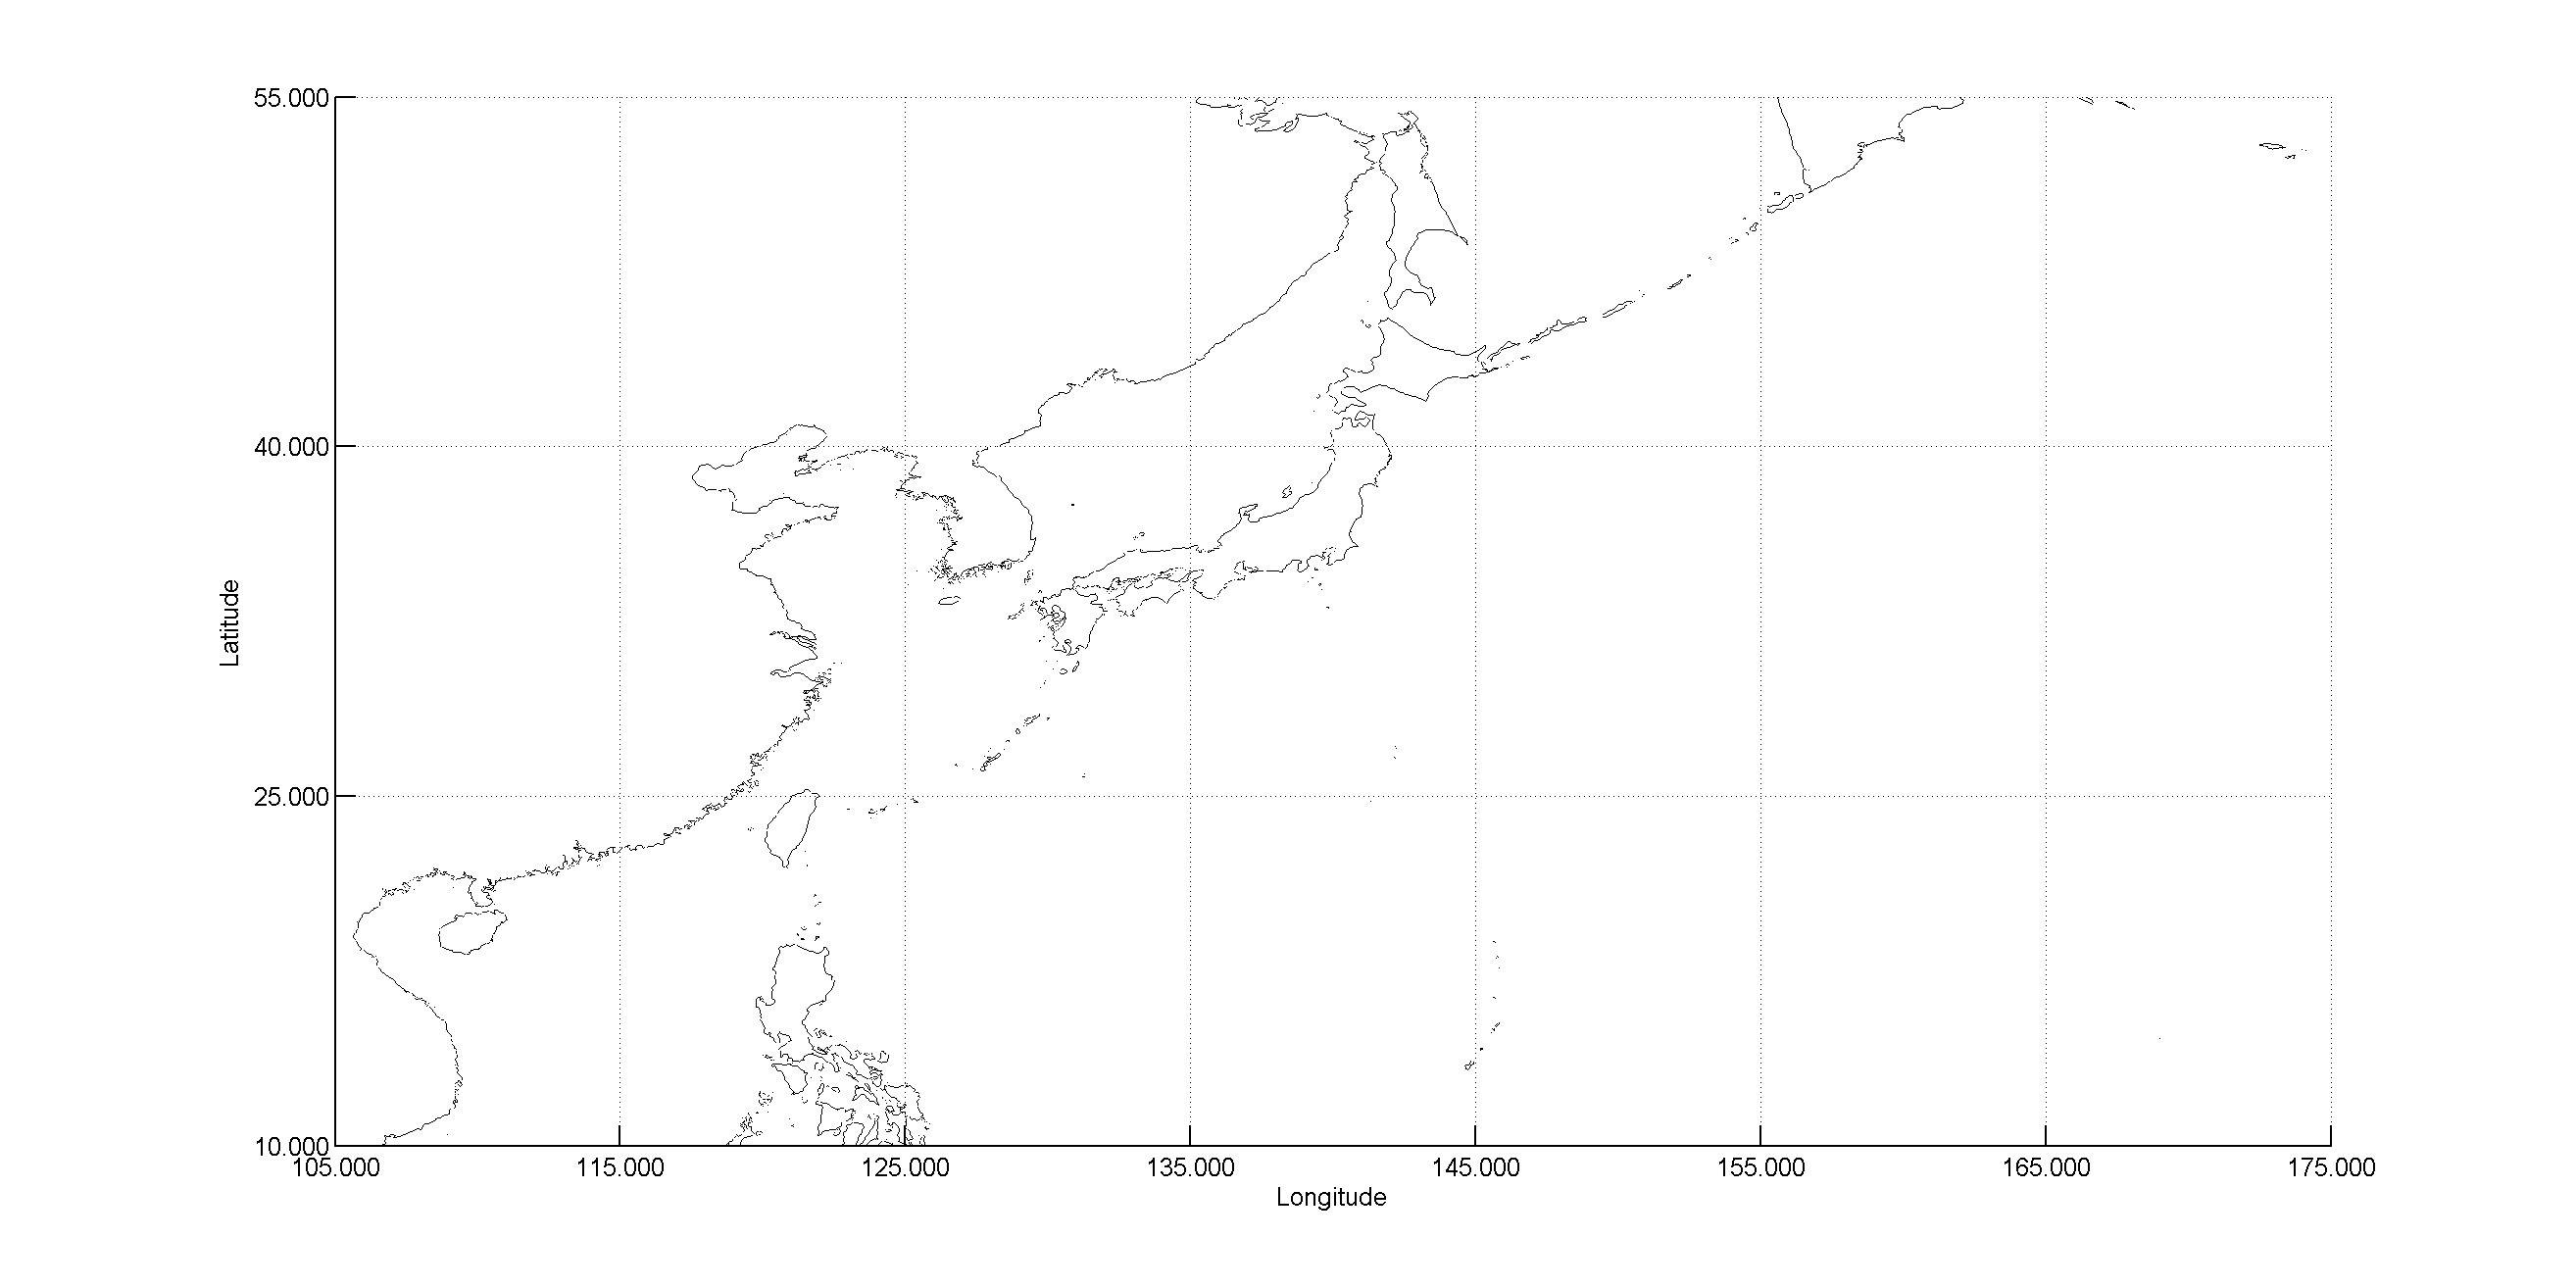 CYCLE_163 - Japan Descending passes